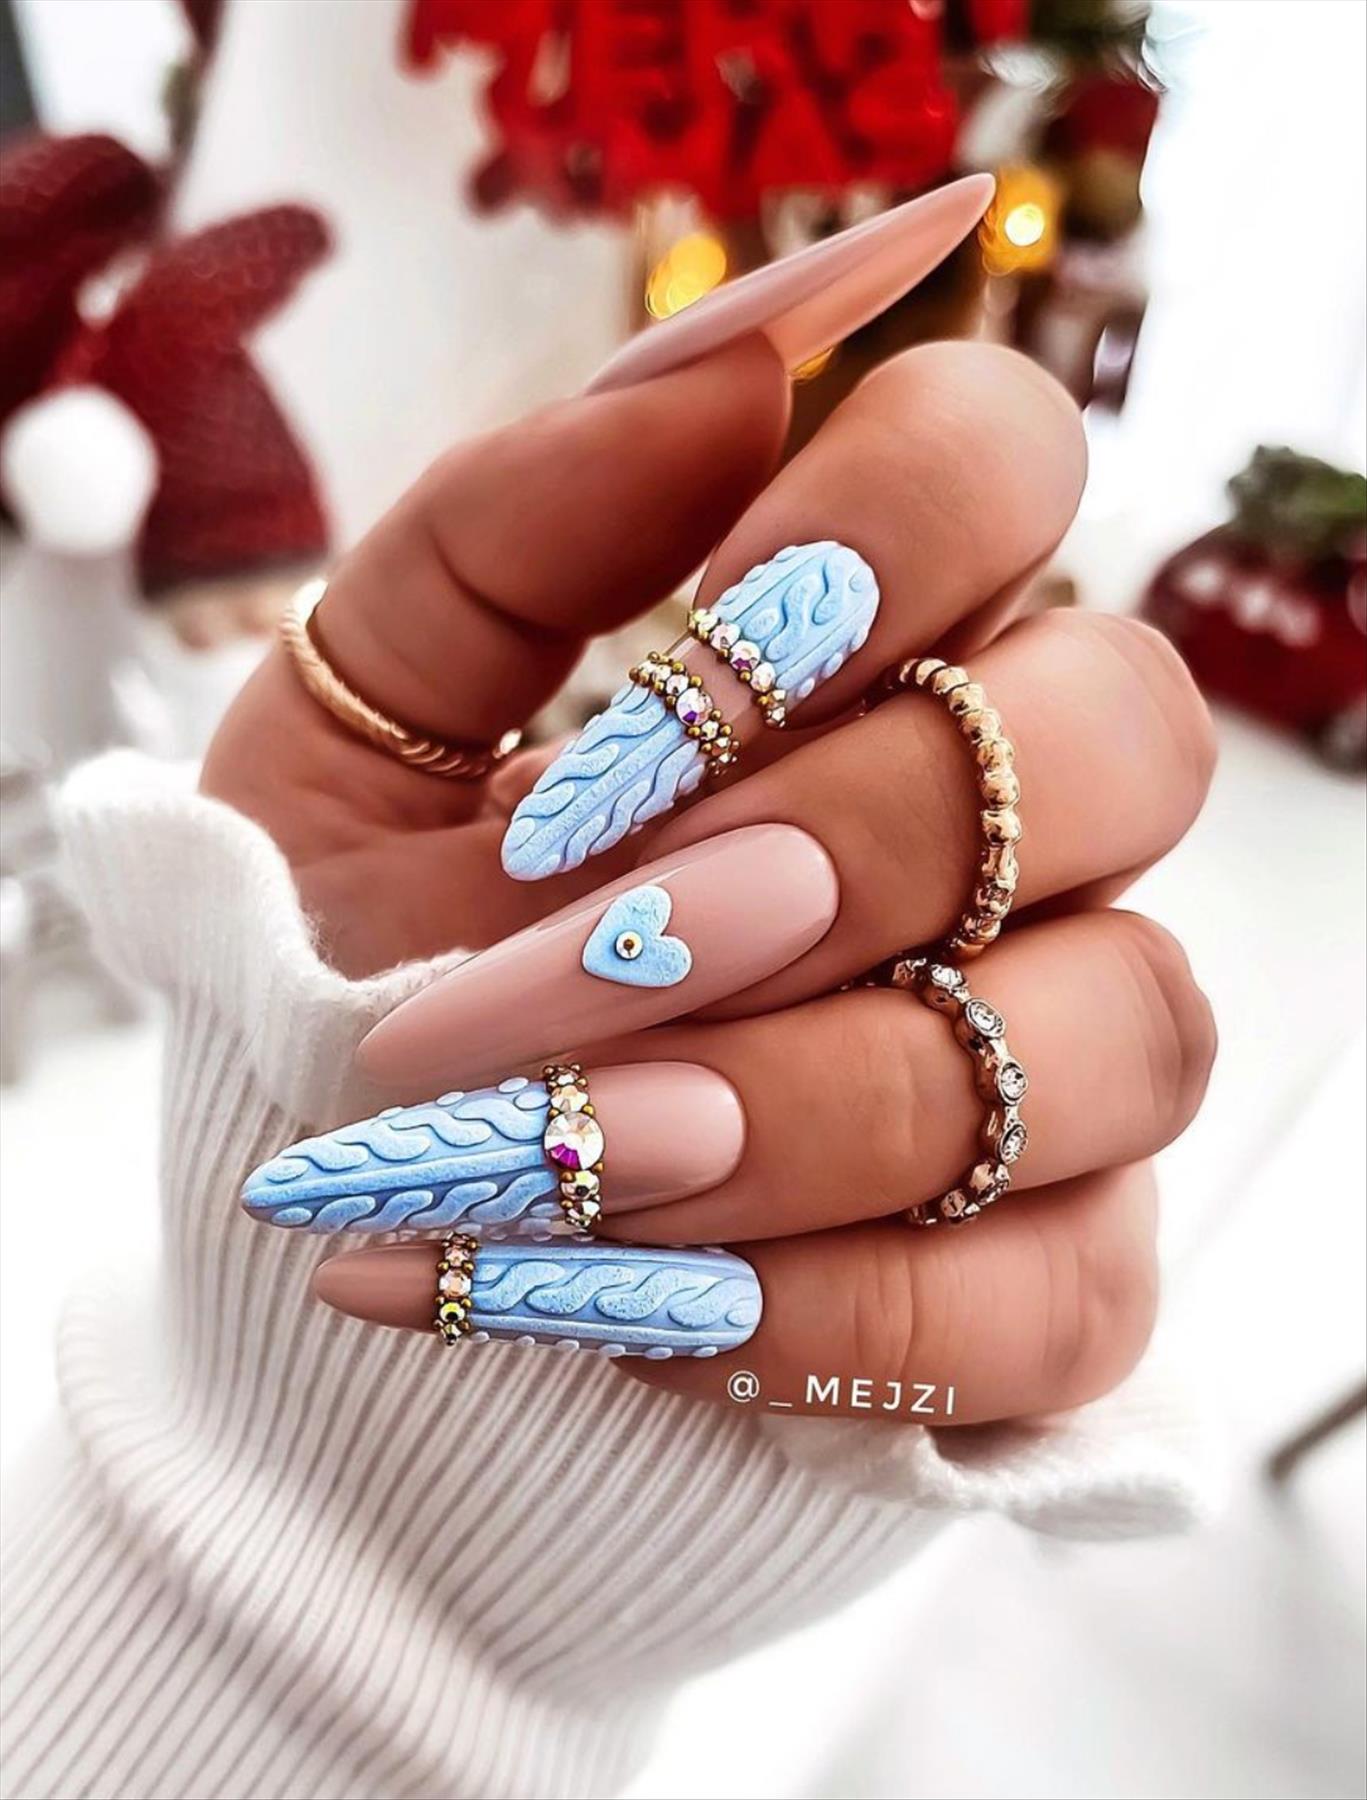 Best Christmas nail art designs 2021 for Winter